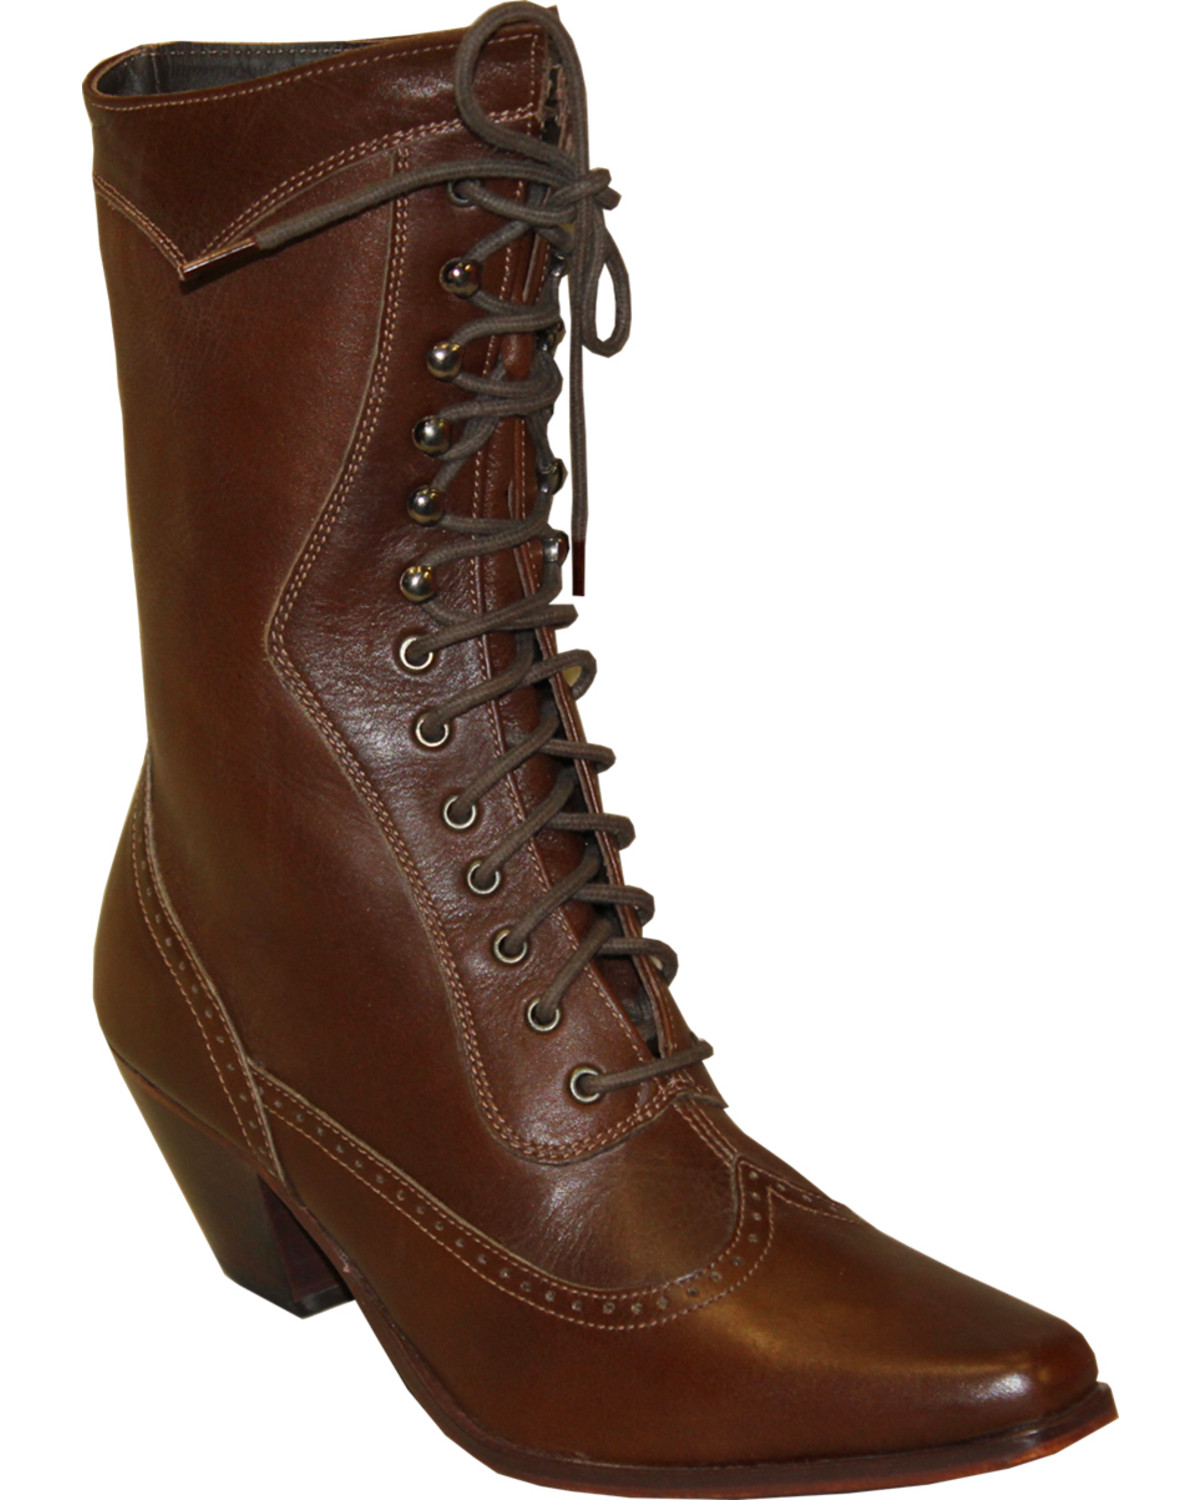 victorian women's boots